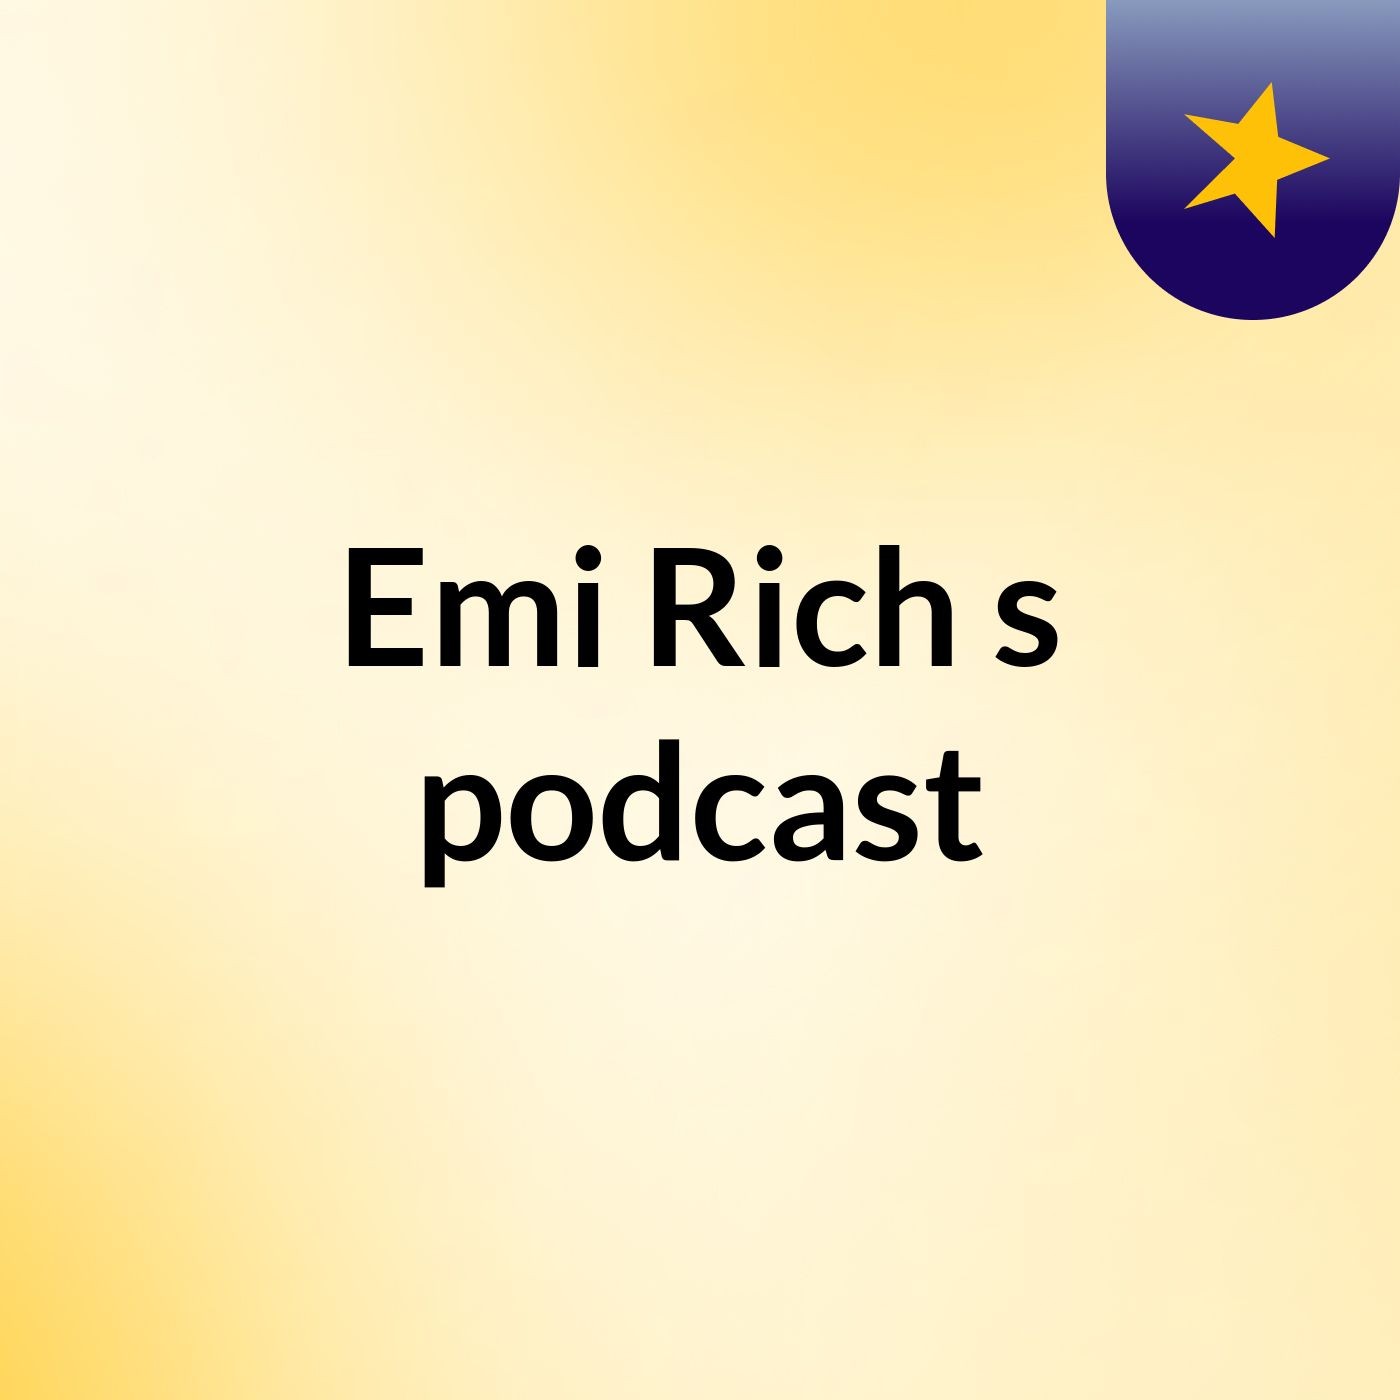 Emi Rich's podcast